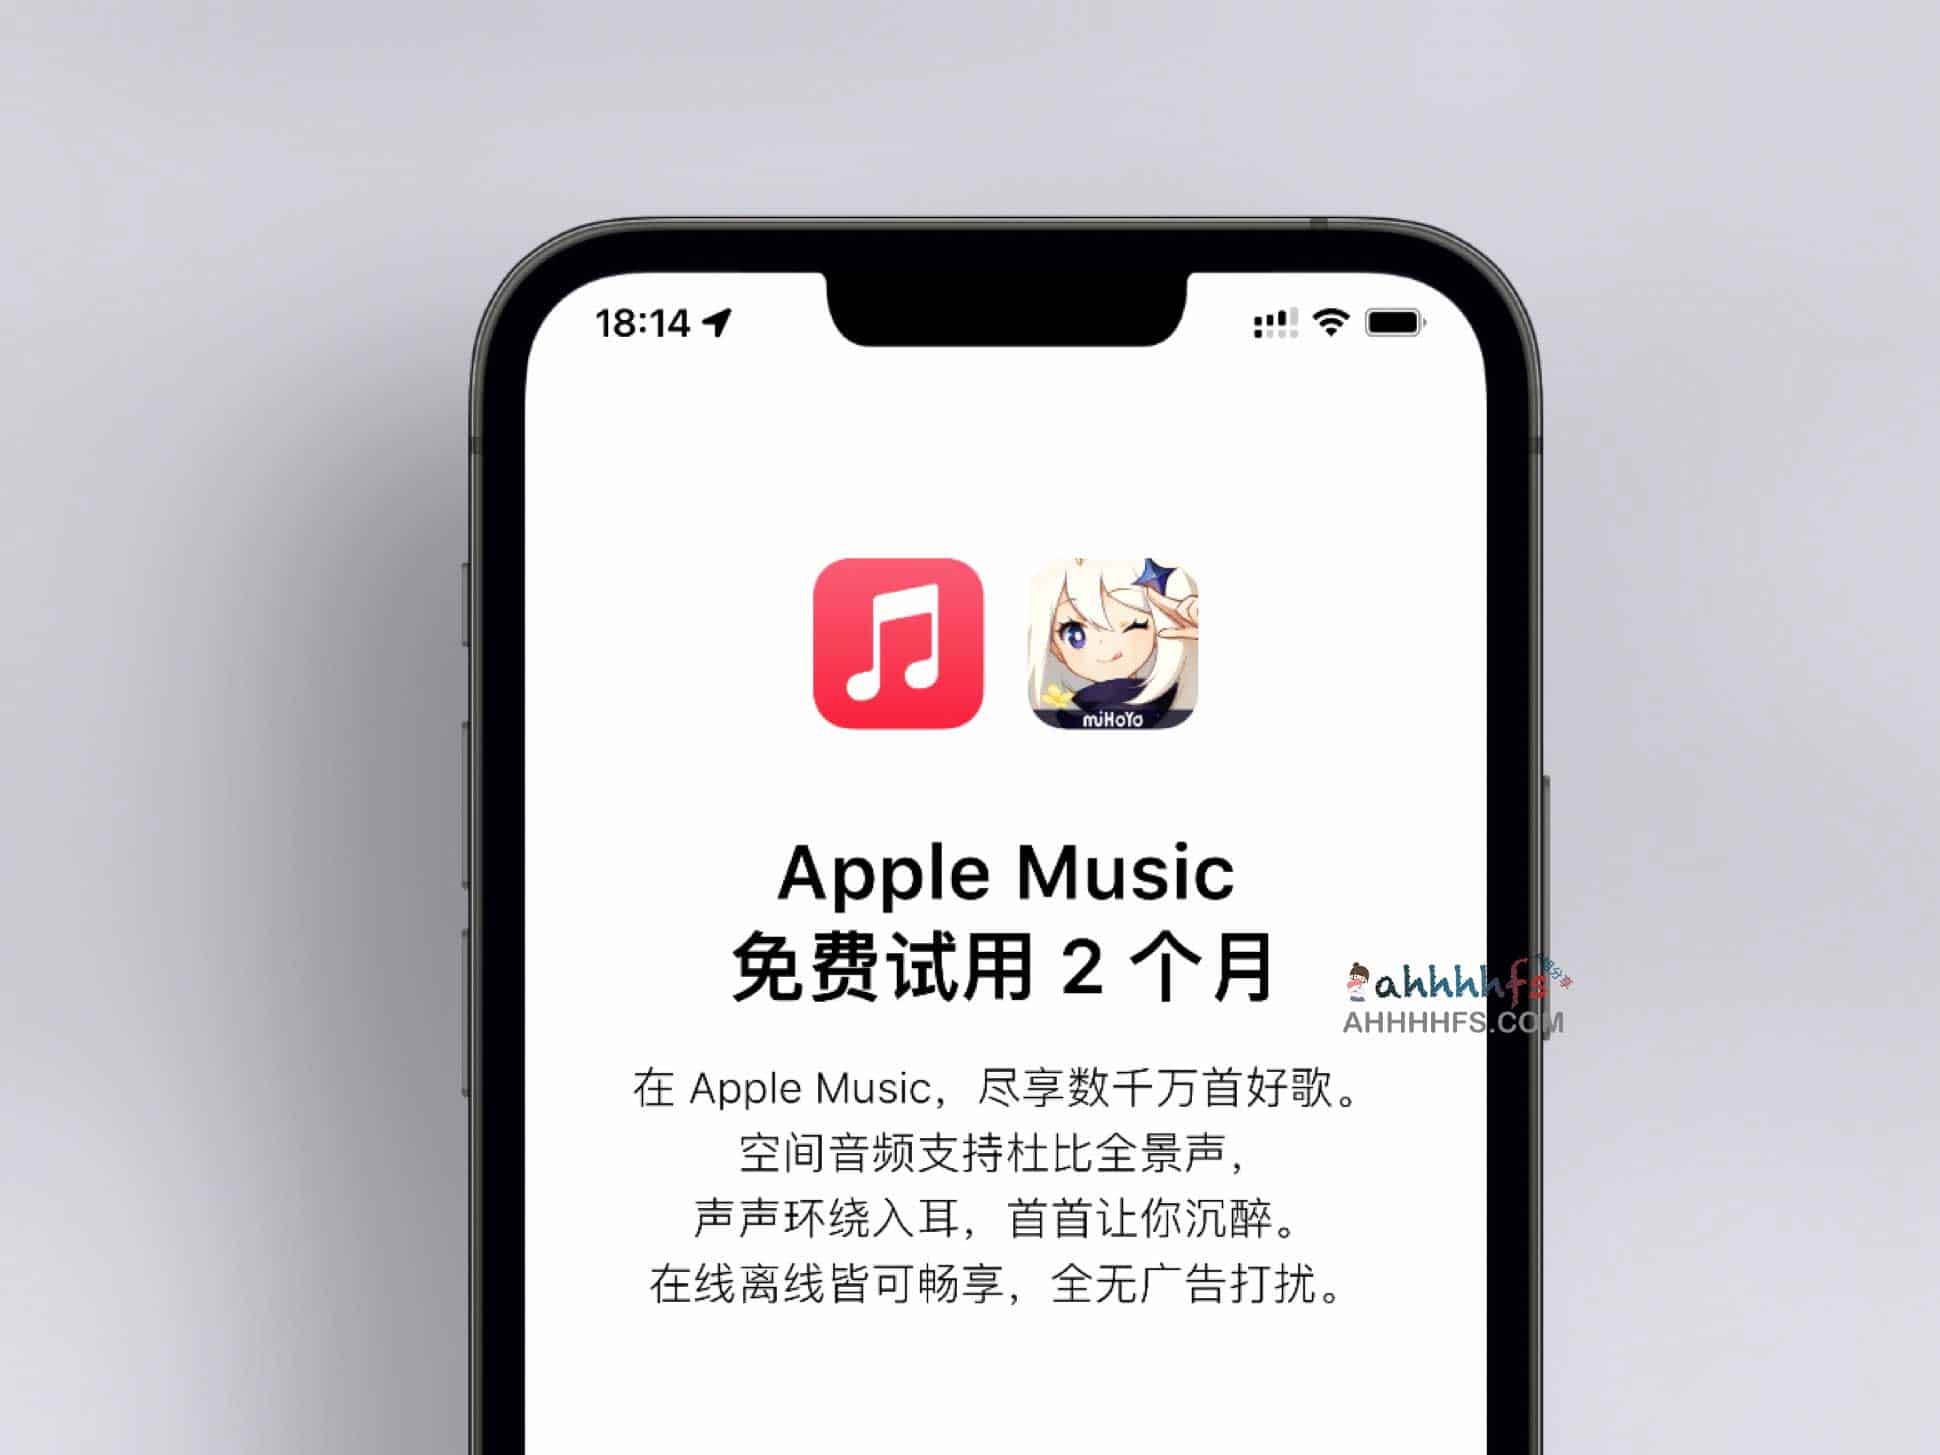 Apple Music 免费试用 2个月